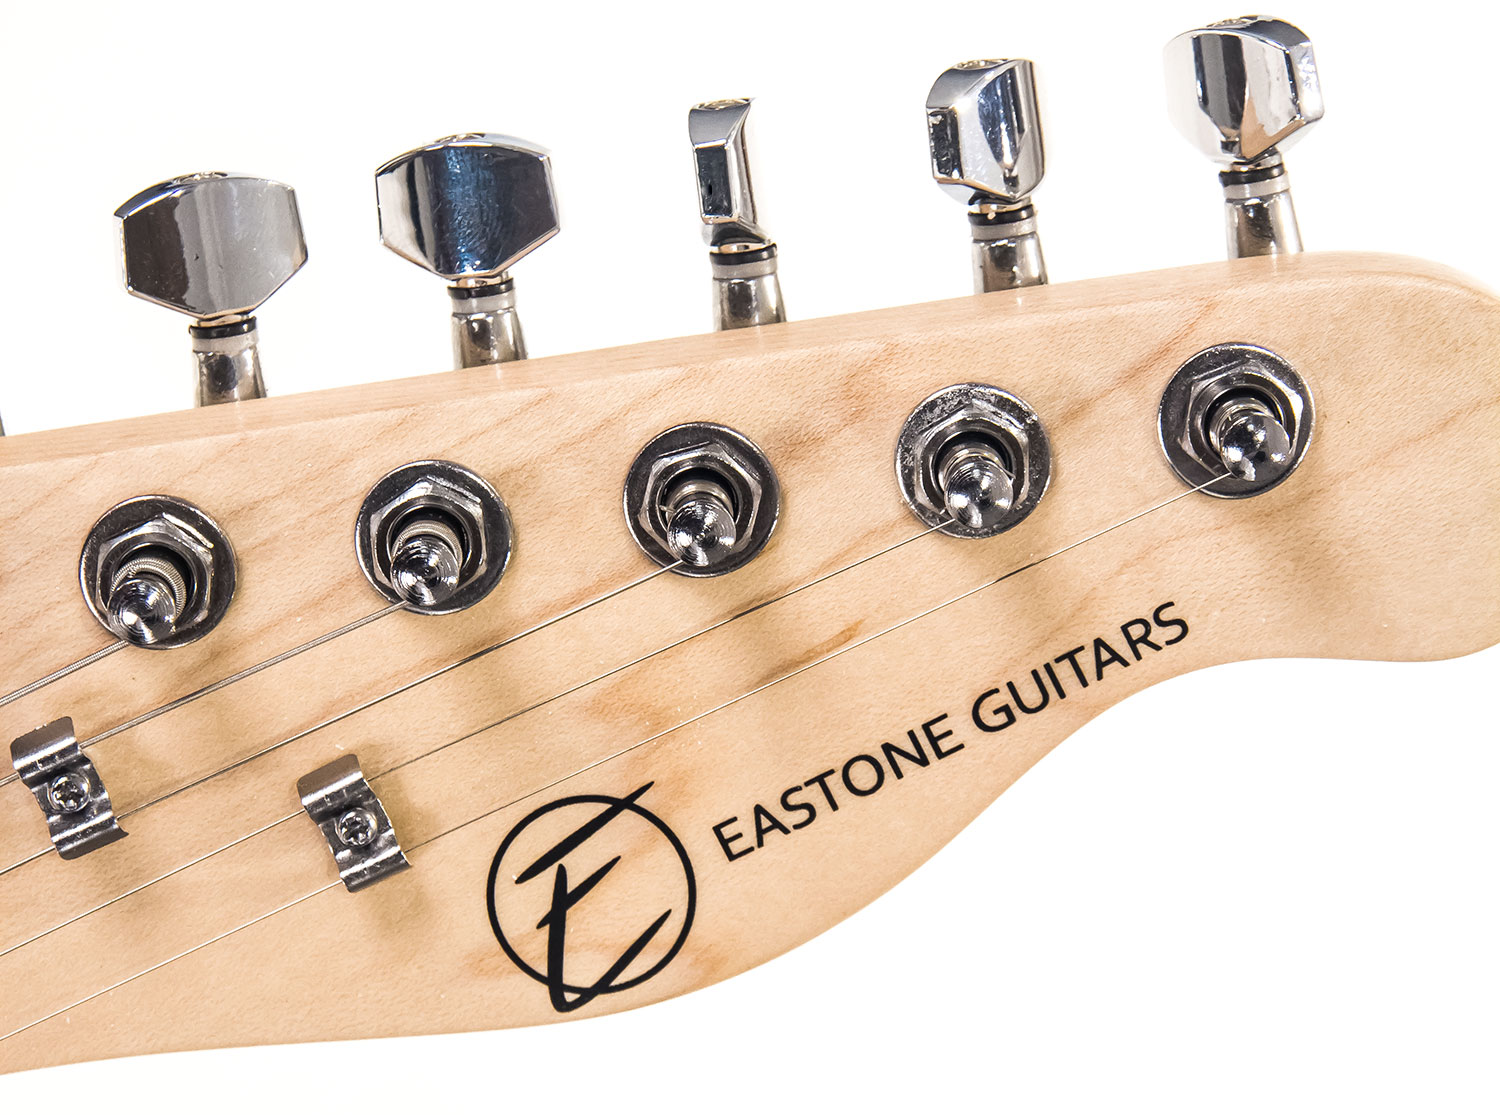 Eastone Tl70 Ss Ht Pur - Black - Tel shape electric guitar - Variation 4